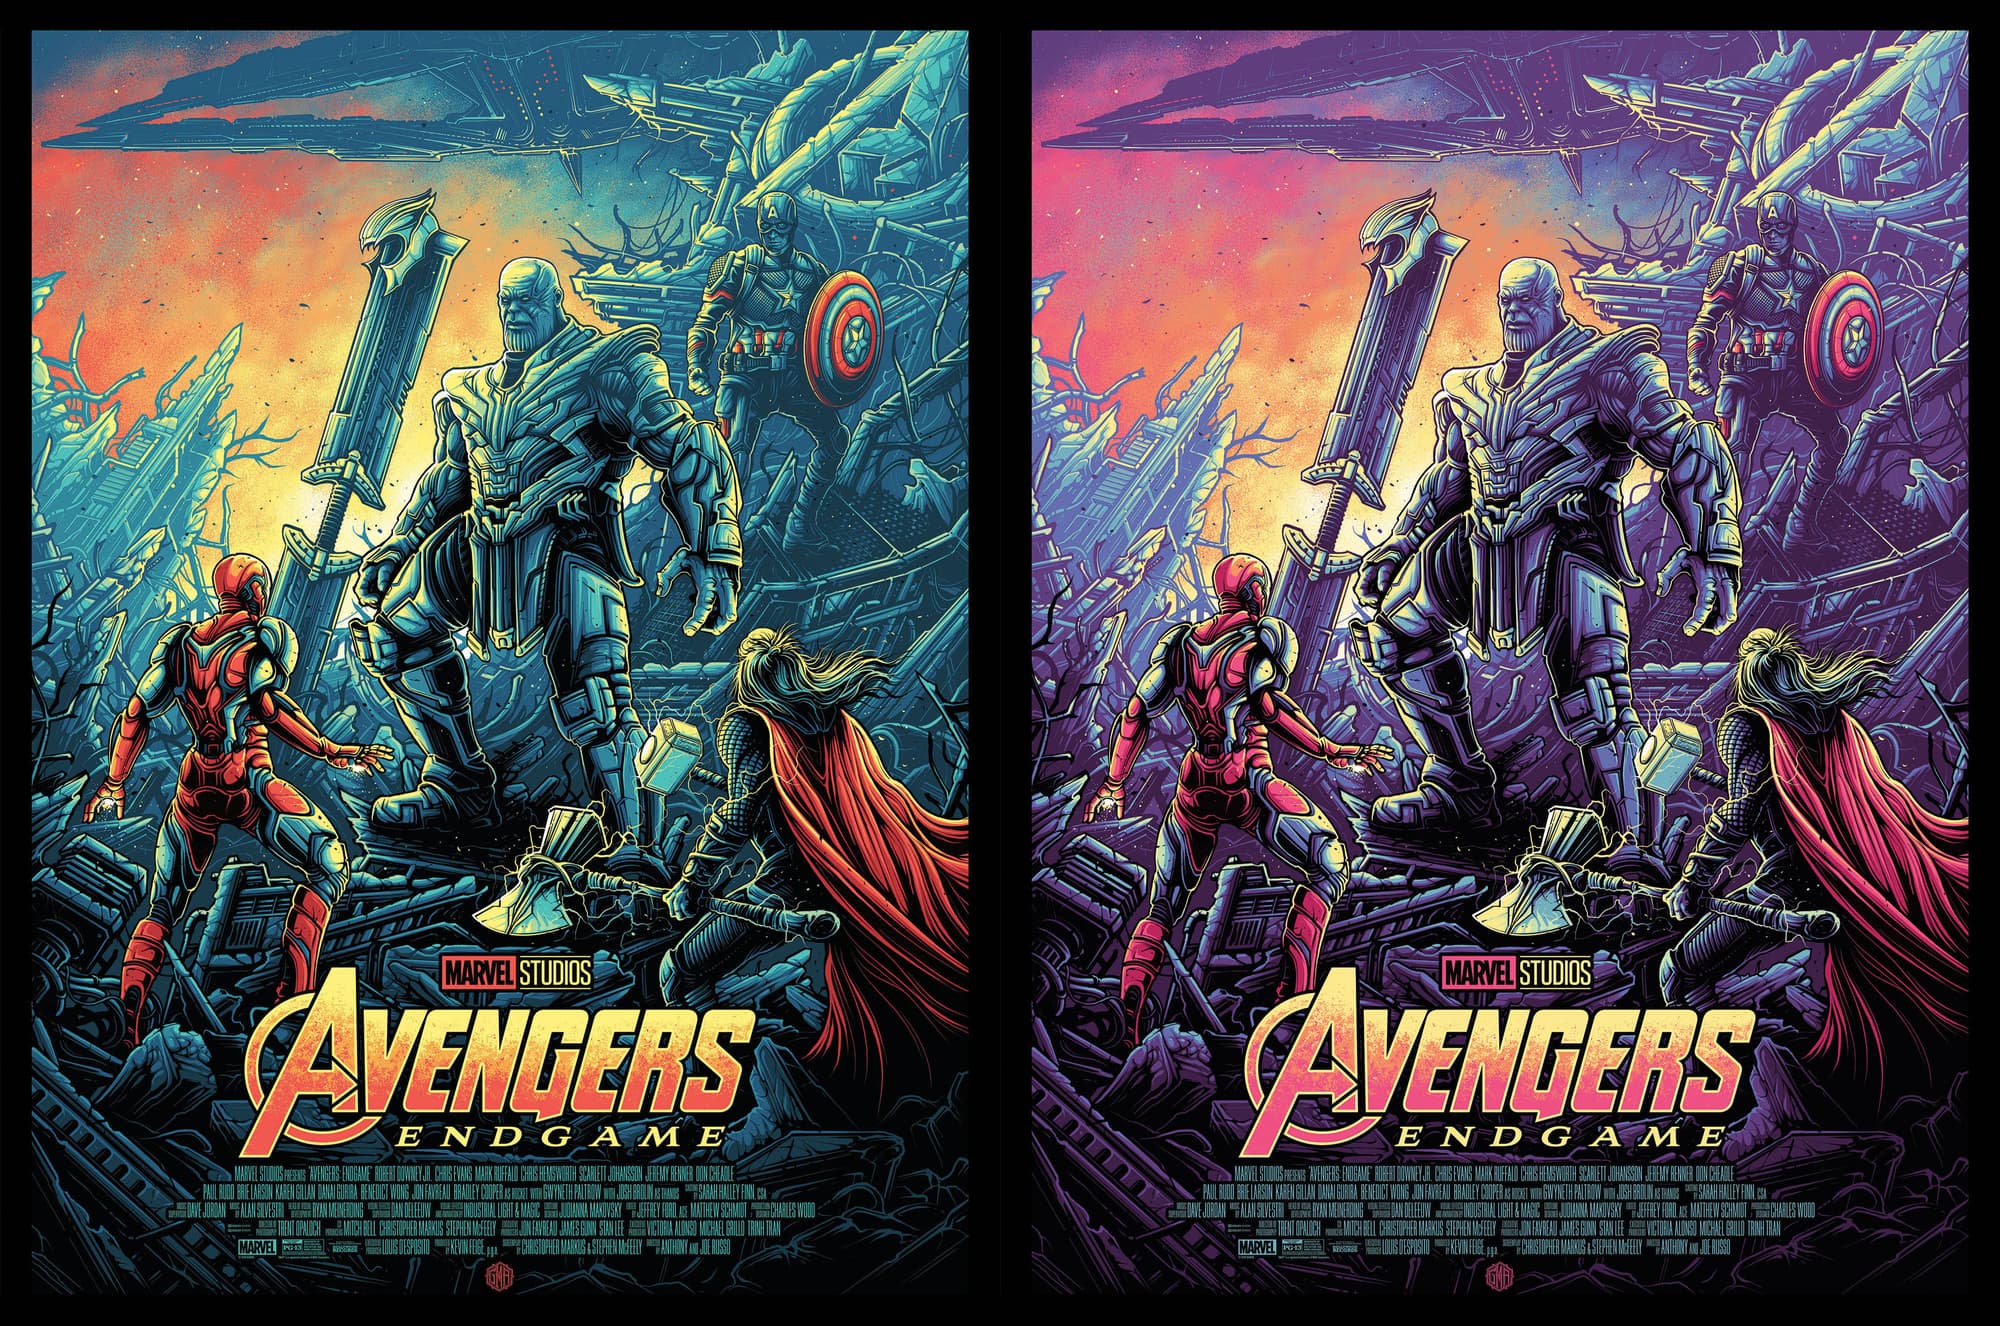 Avengers Endgame by Dan Mumford